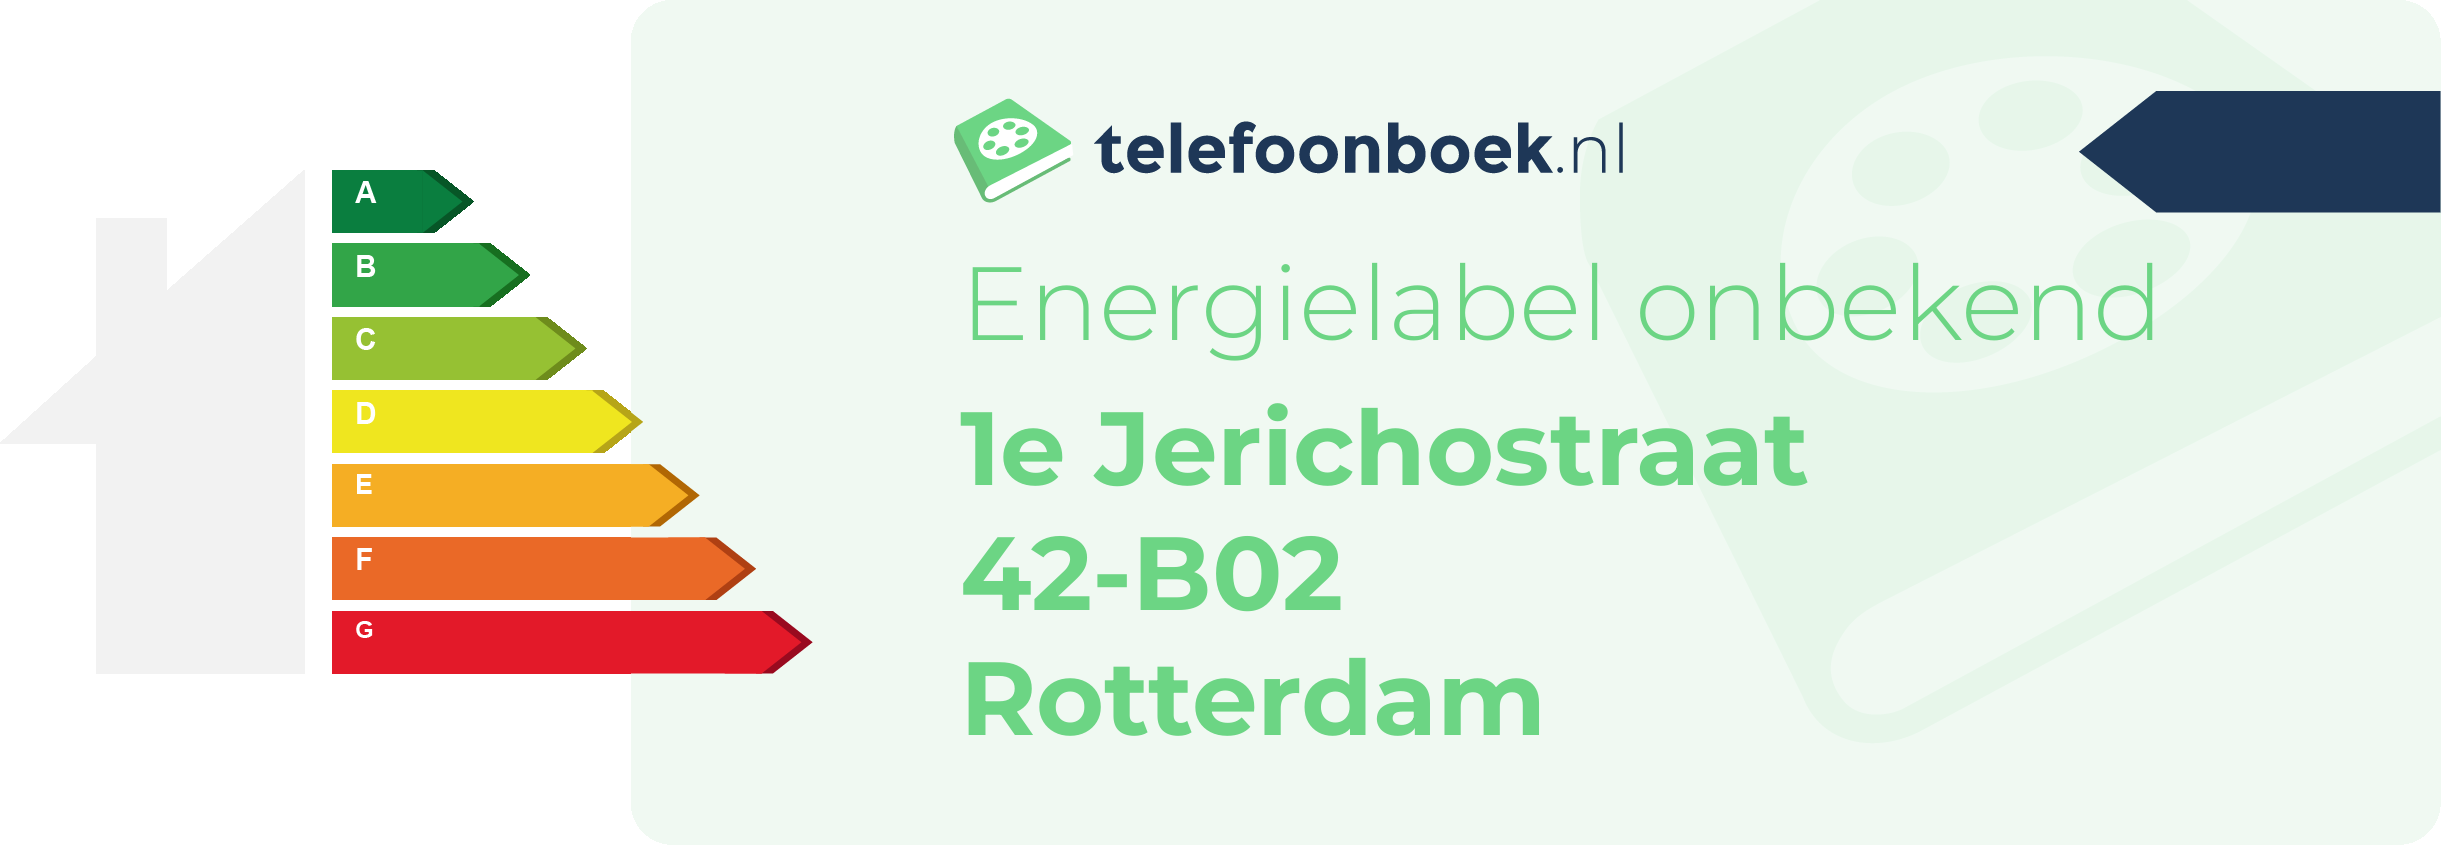 Energielabel 1e Jerichostraat 42-B02 Rotterdam